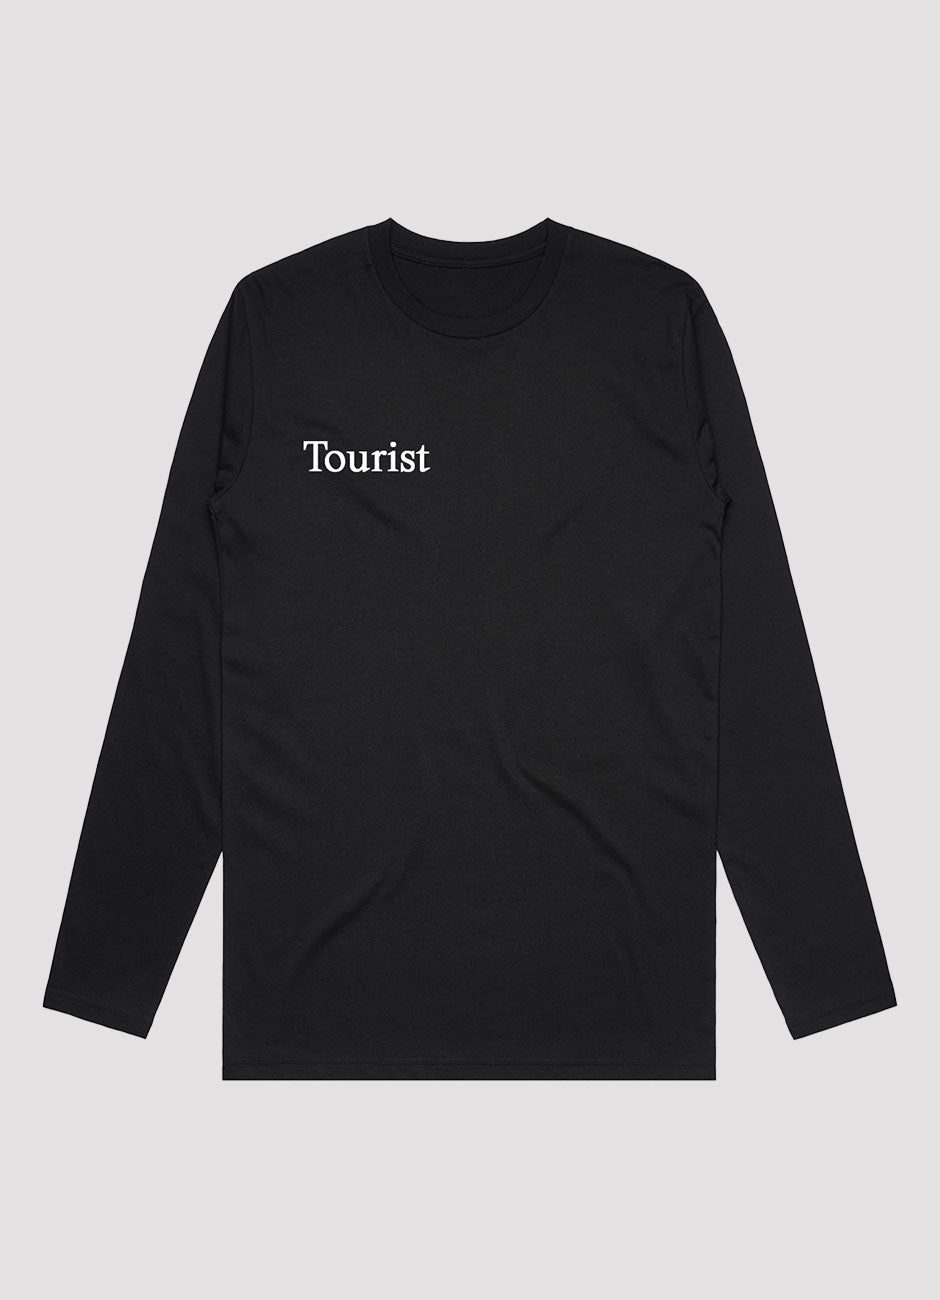 Tourist Black Long Sleeve T-Shirt